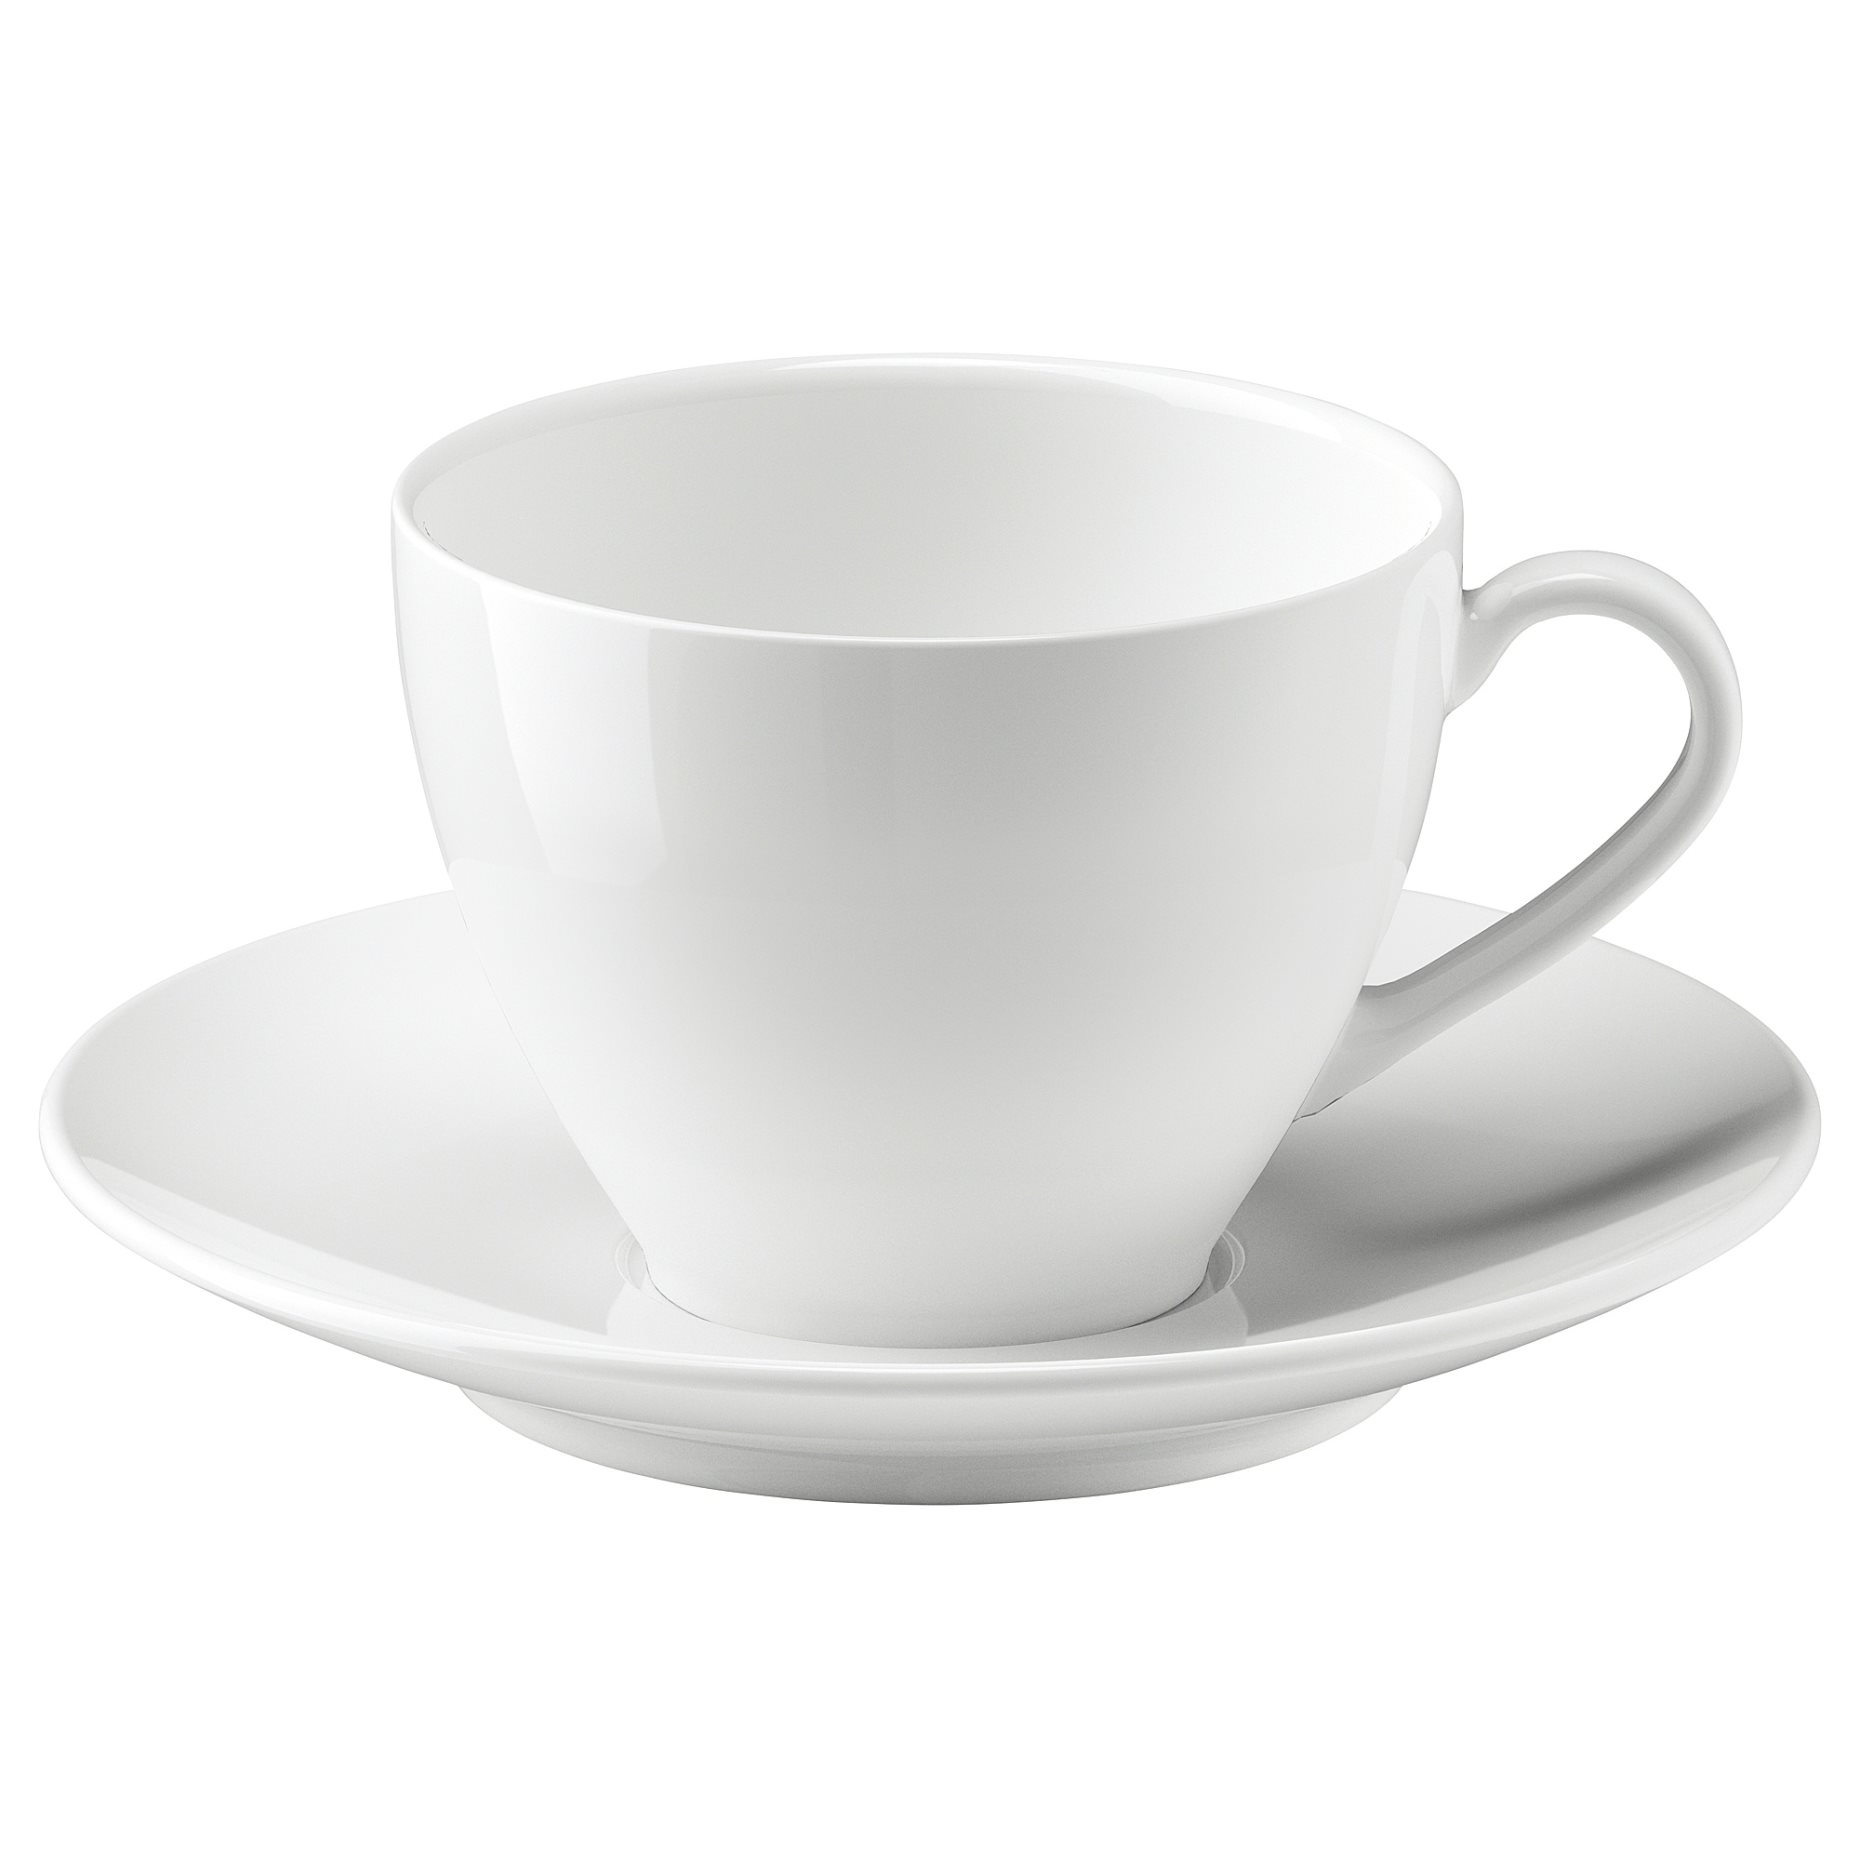 VÄRDERA, coffee cup and saucer, 602.774.63